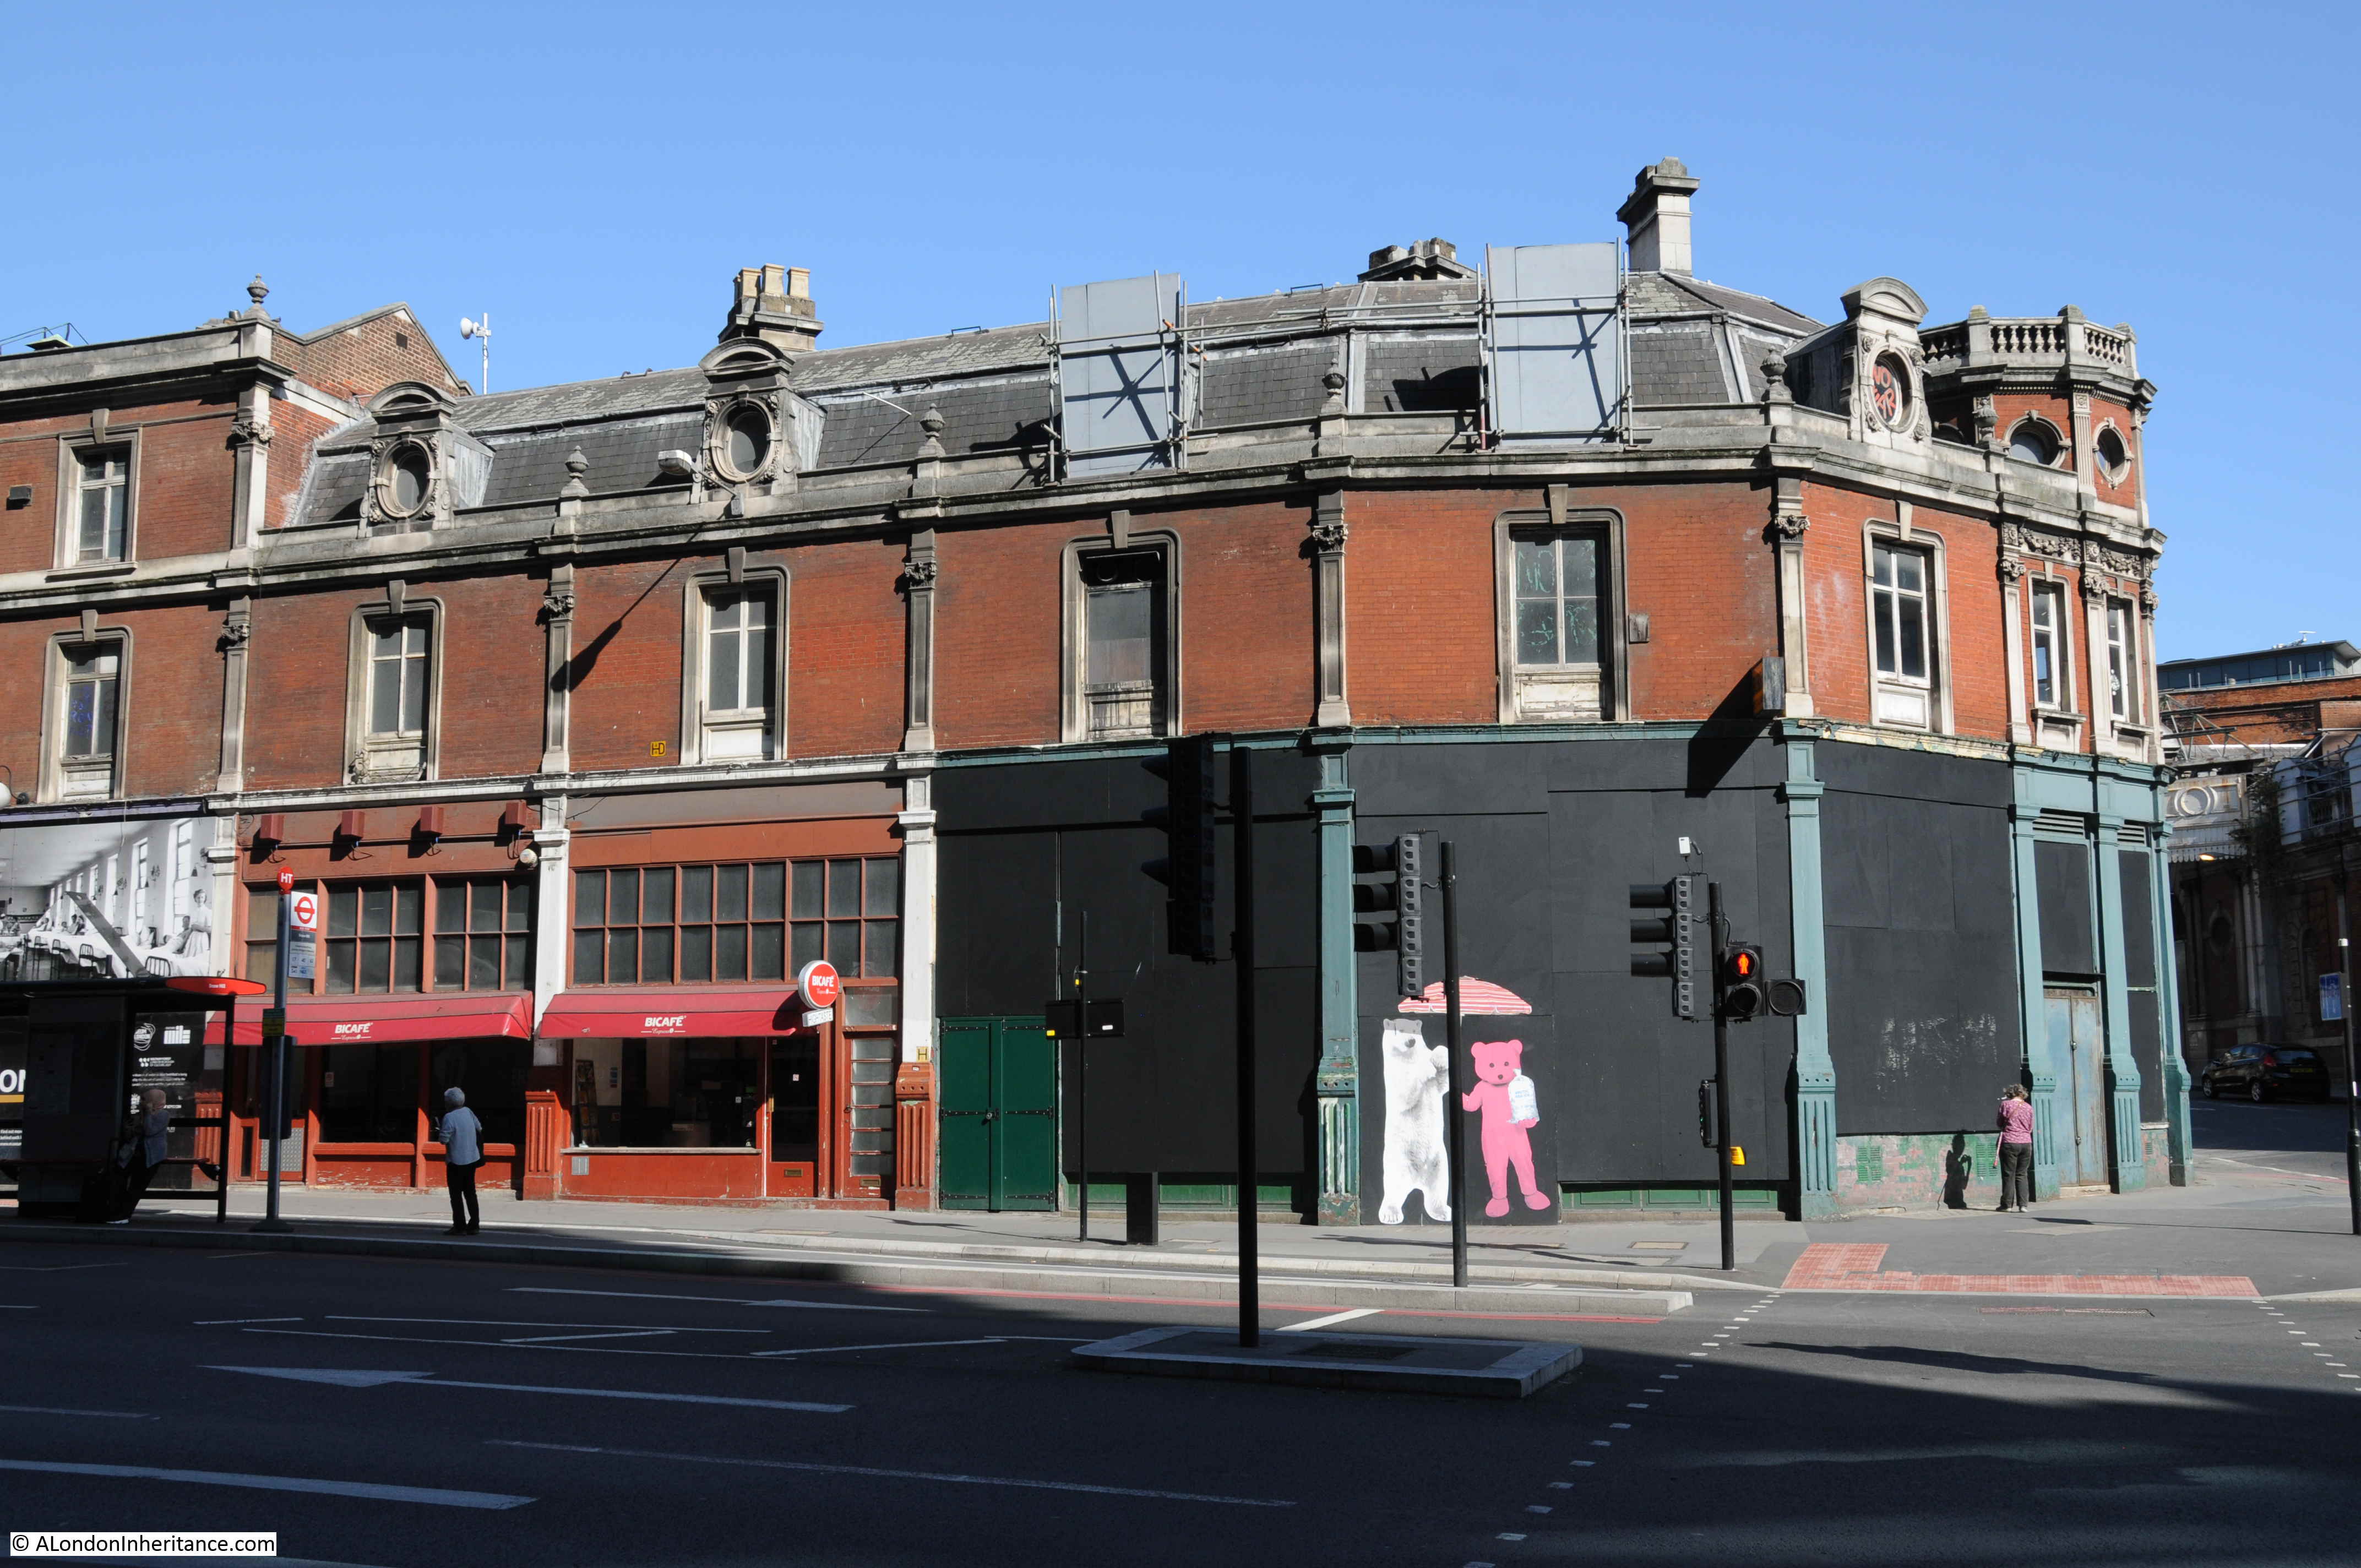 The Buildings of Smithfield Market - A London Inheritance